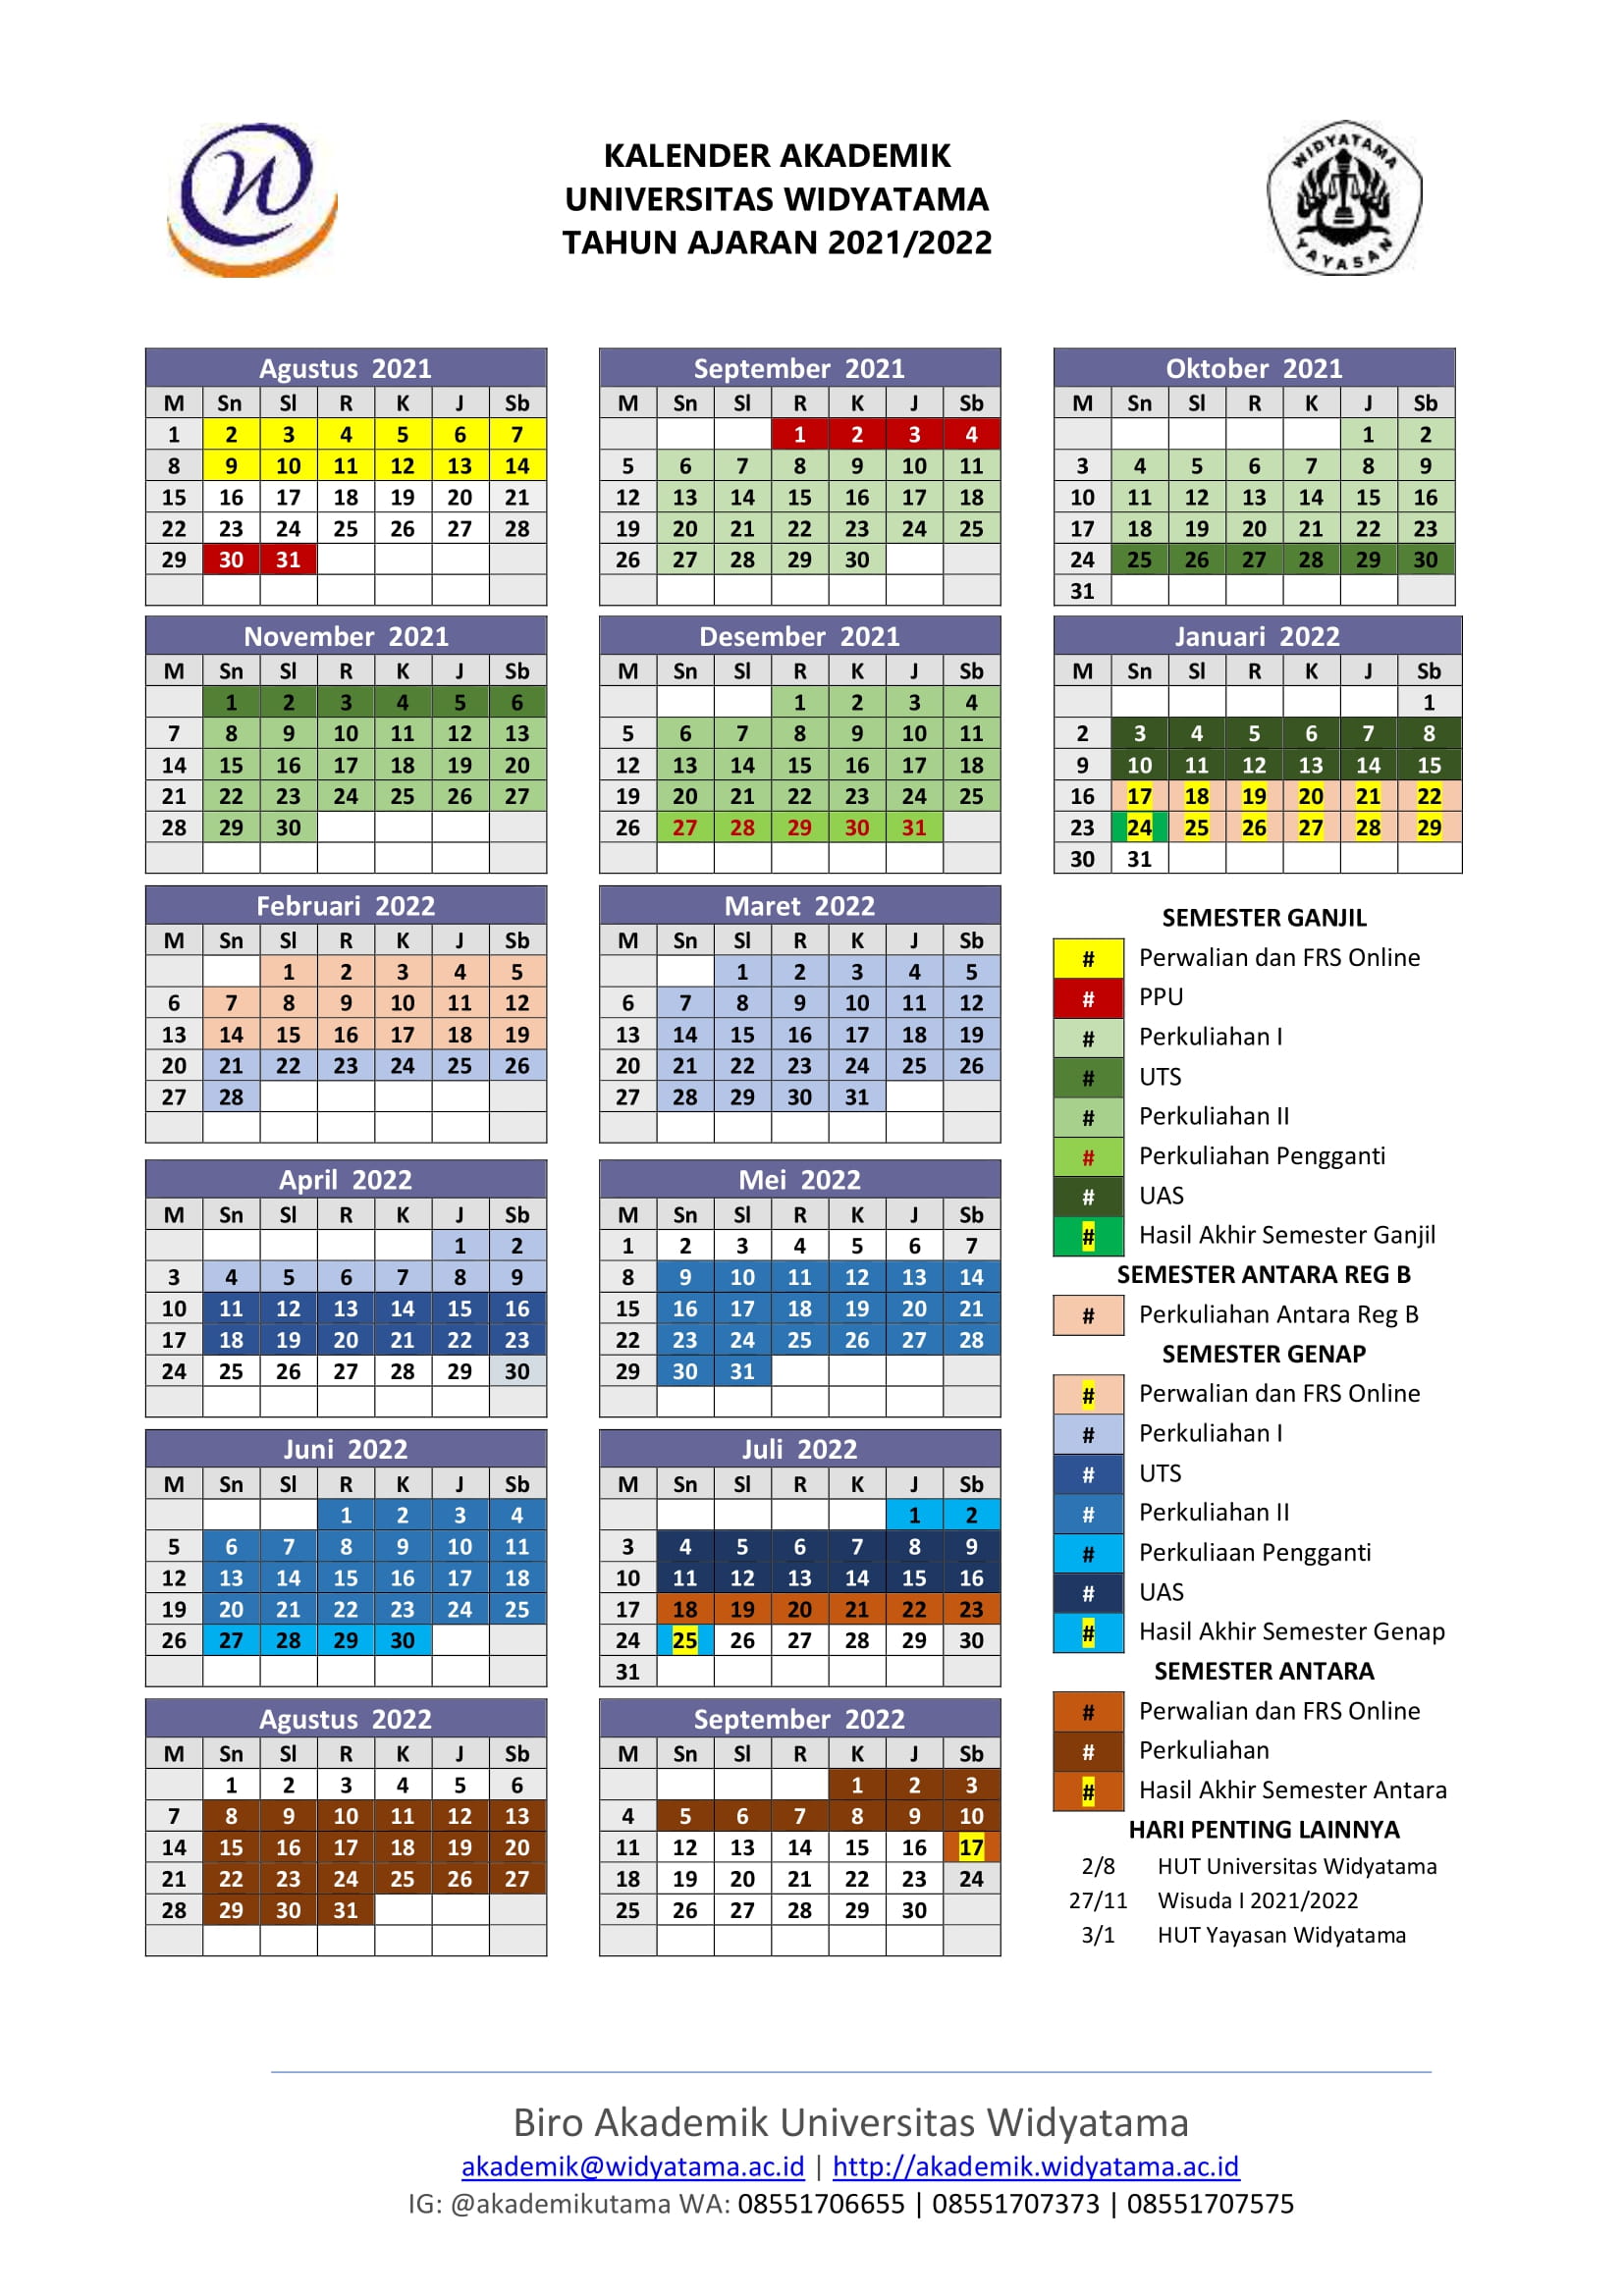 Kalender akademik telkom university 2021